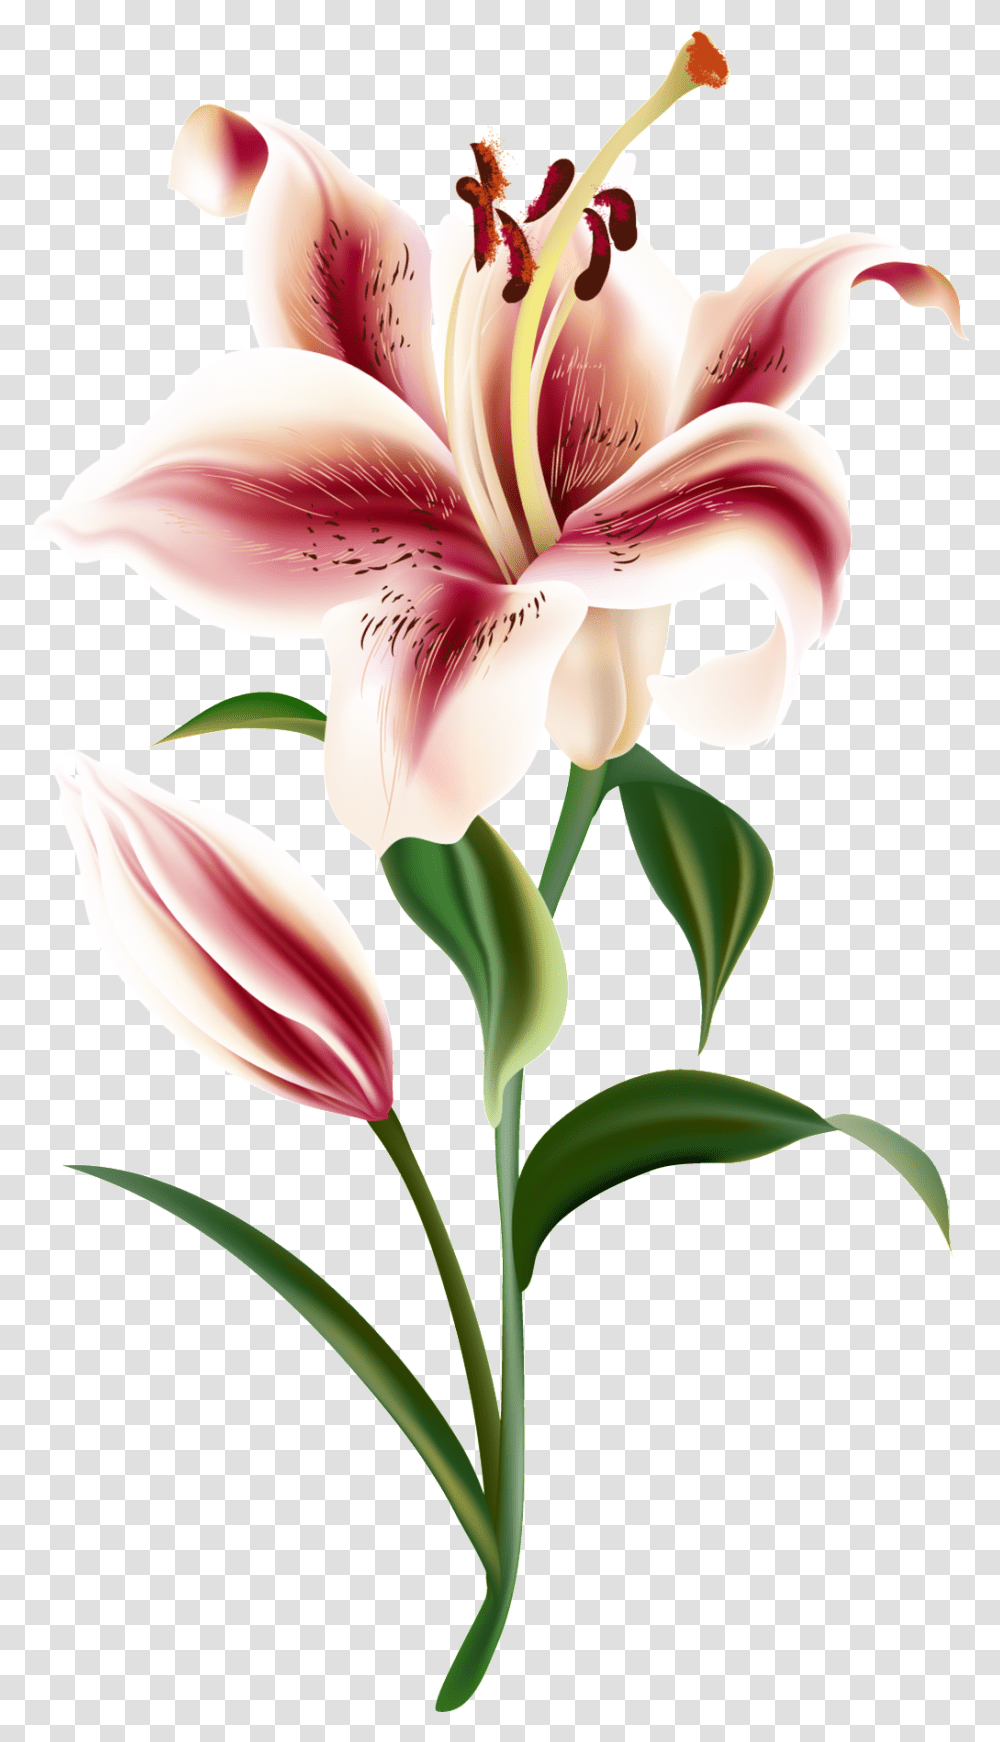 Un Transparente Ornamental Para Un Corazon Rojo Vector Lily Flower Shutterstock, Plant, Blossom Transparent Png